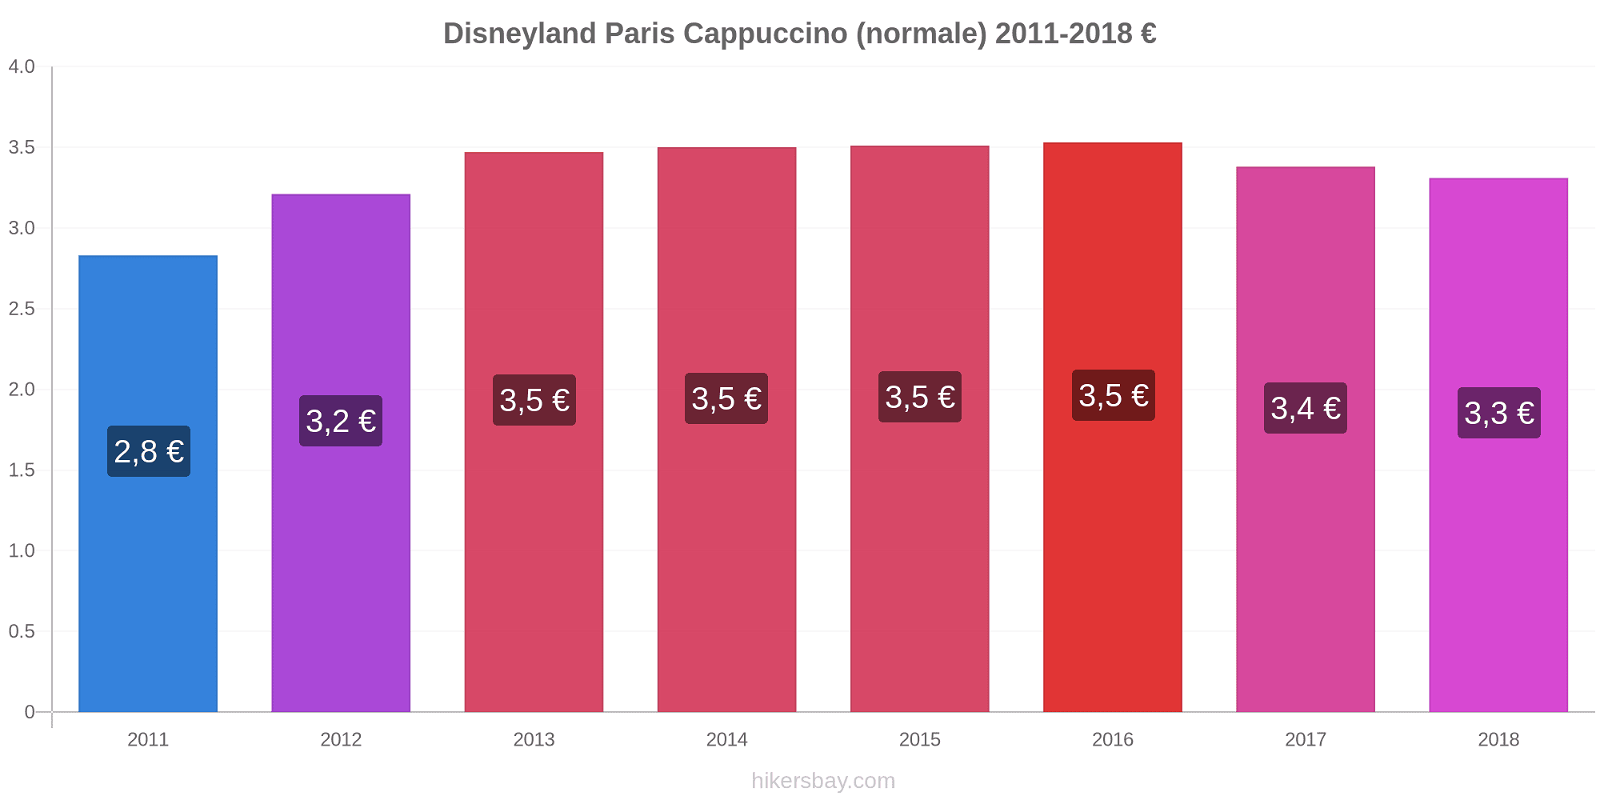 Disneyland Paris variazioni di prezzo Cappuccino (normale) hikersbay.com